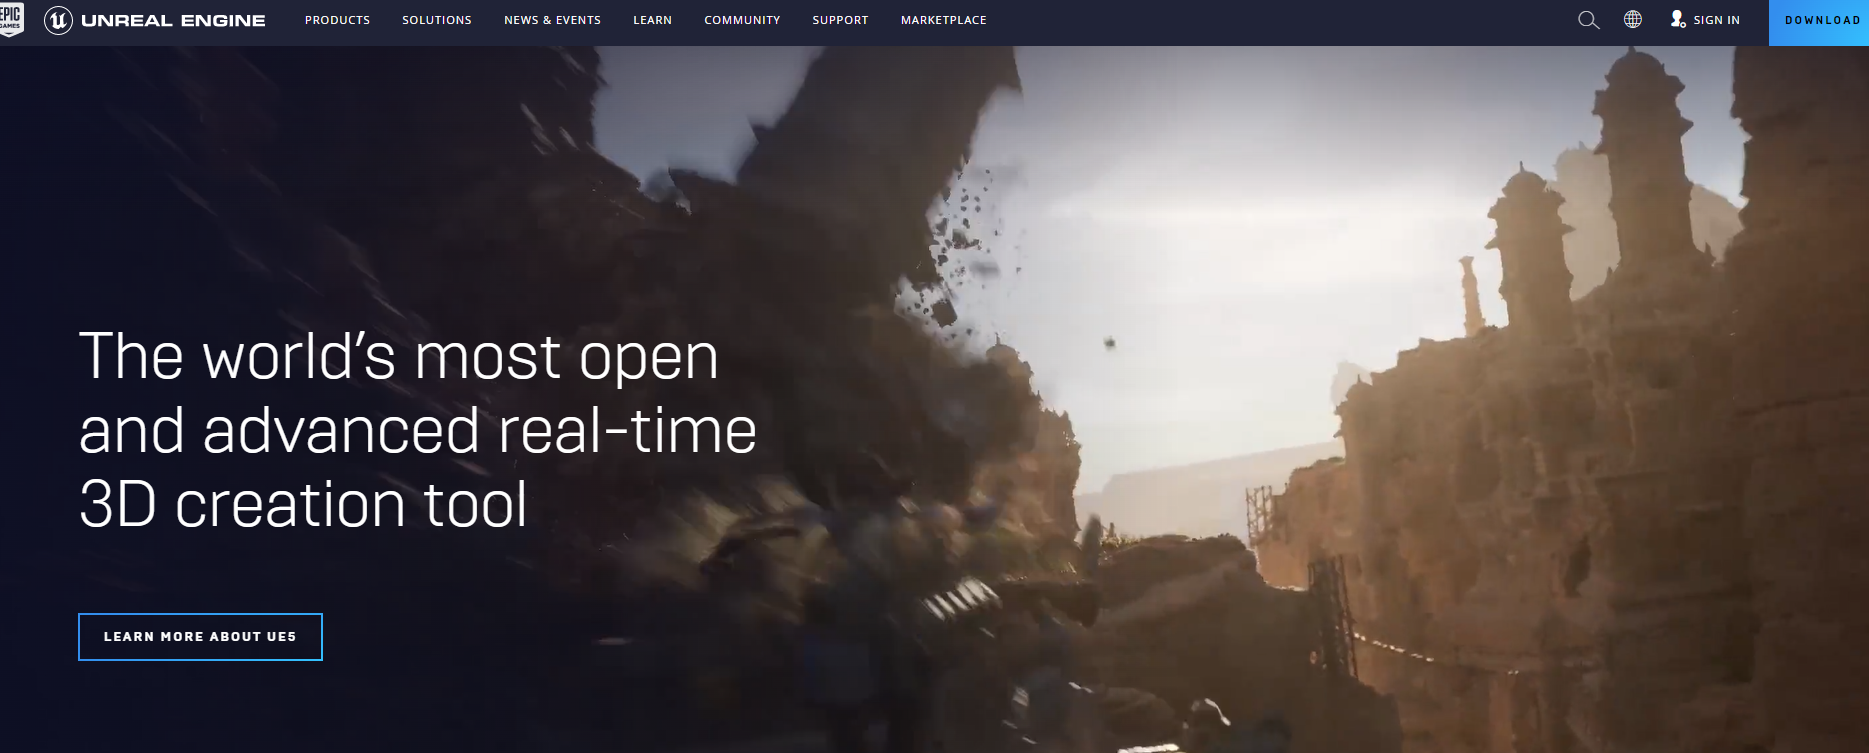 Unreal Engine Homepage